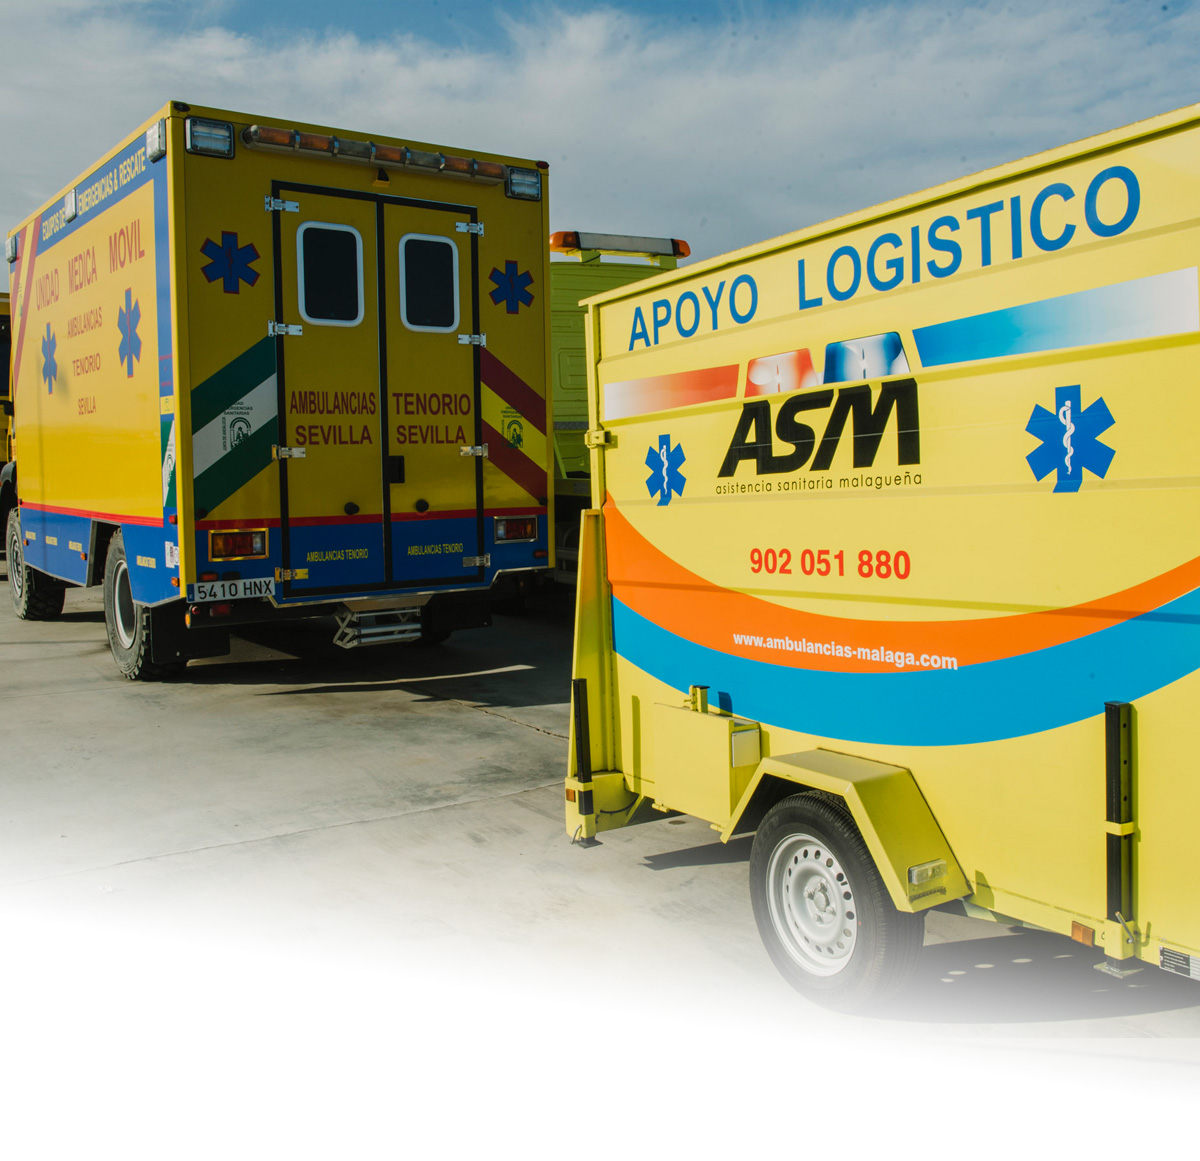 http://ambulancias-malaga.es/wp-content/uploads/2020/04/apoyo-logistico.jpg